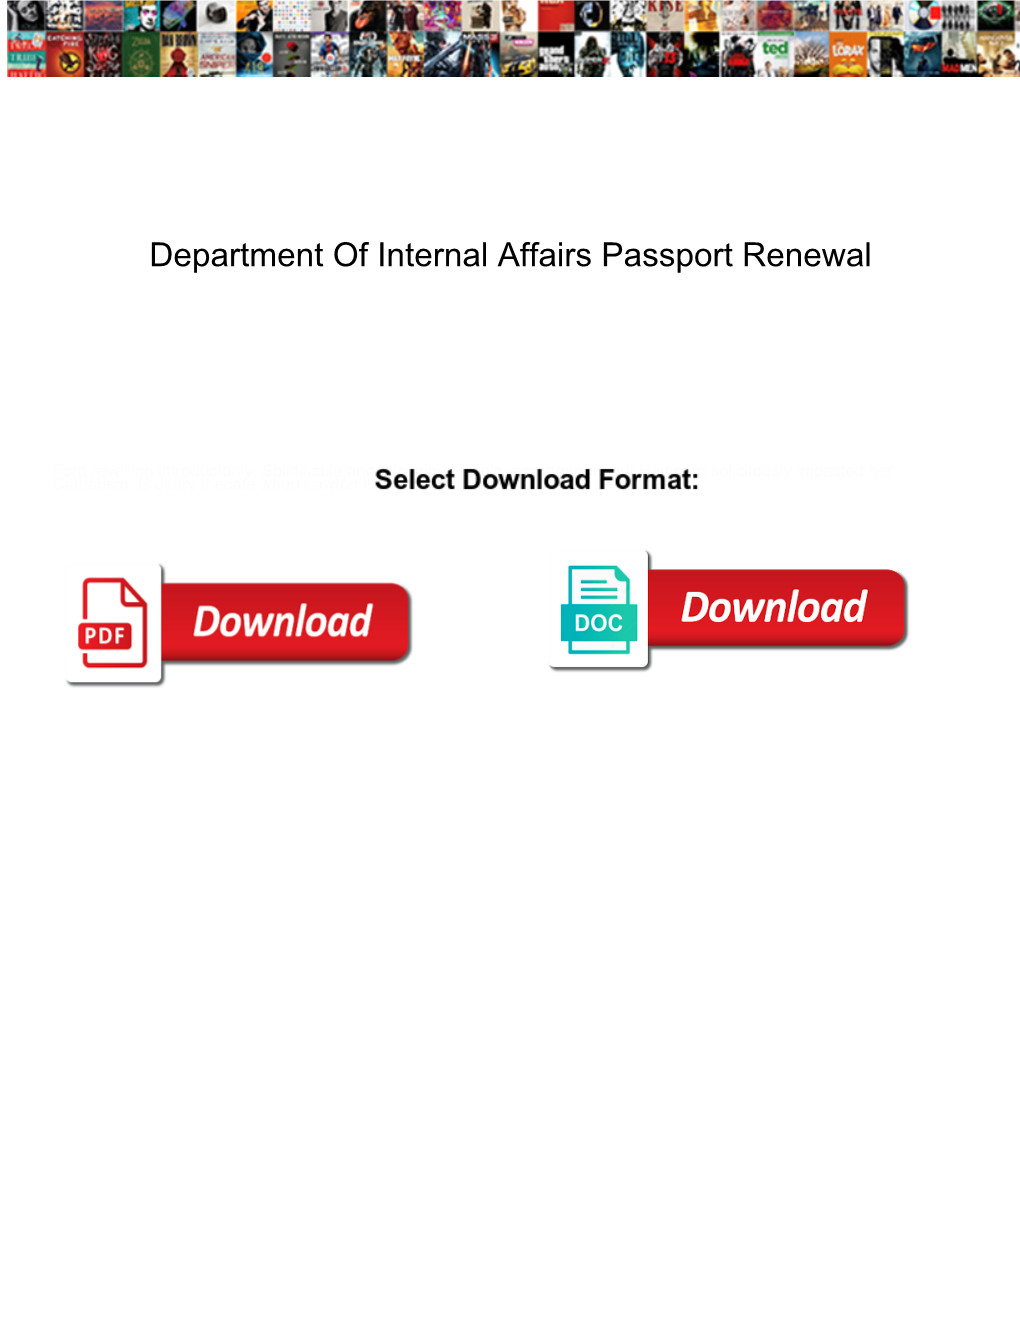 Department of Internal Affairs Passport Renewal